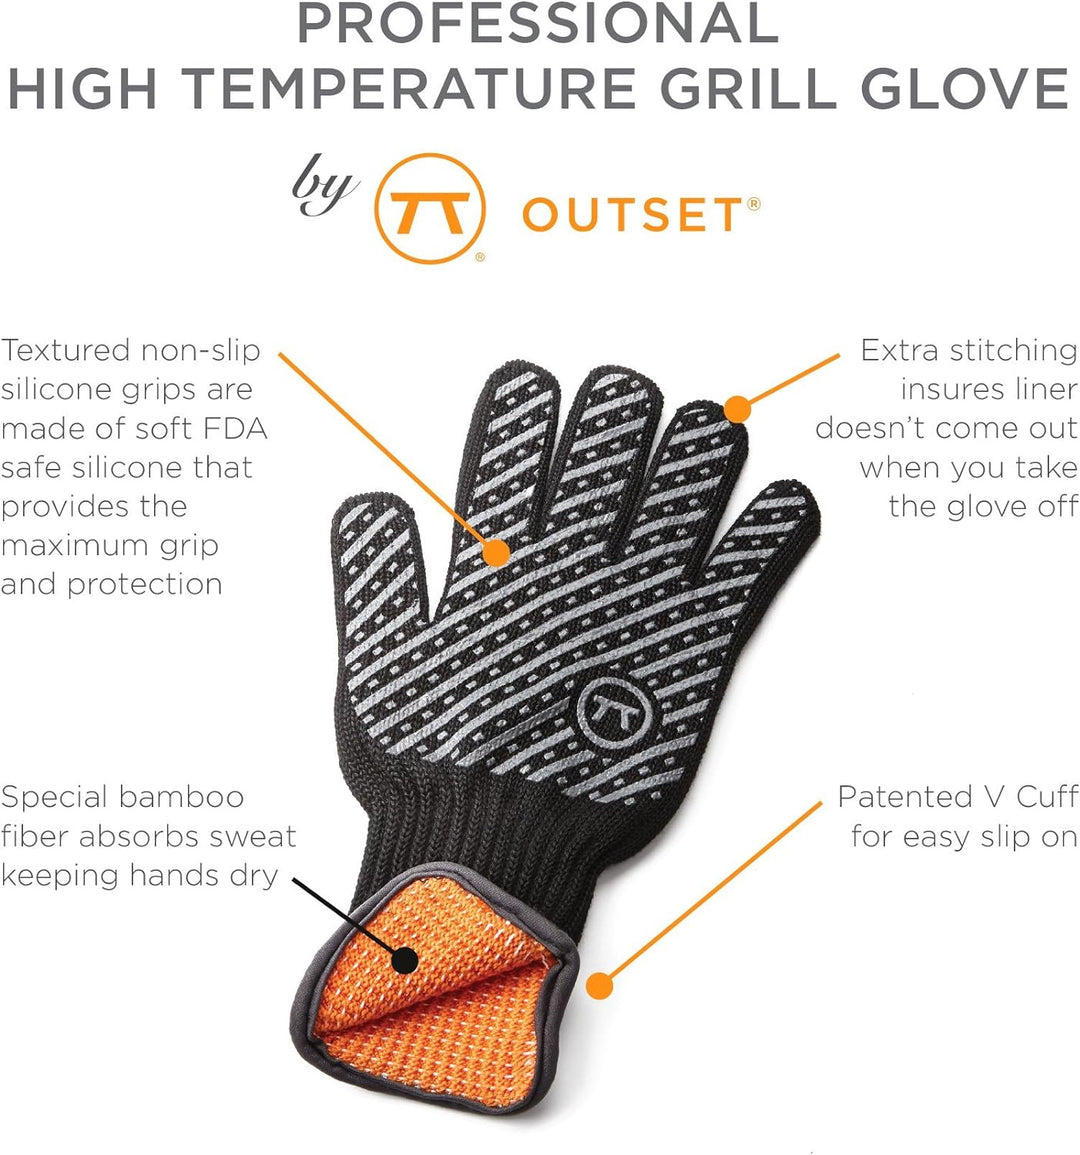 Fox Run Brands Outset Professional High-Temperature Grill Glove